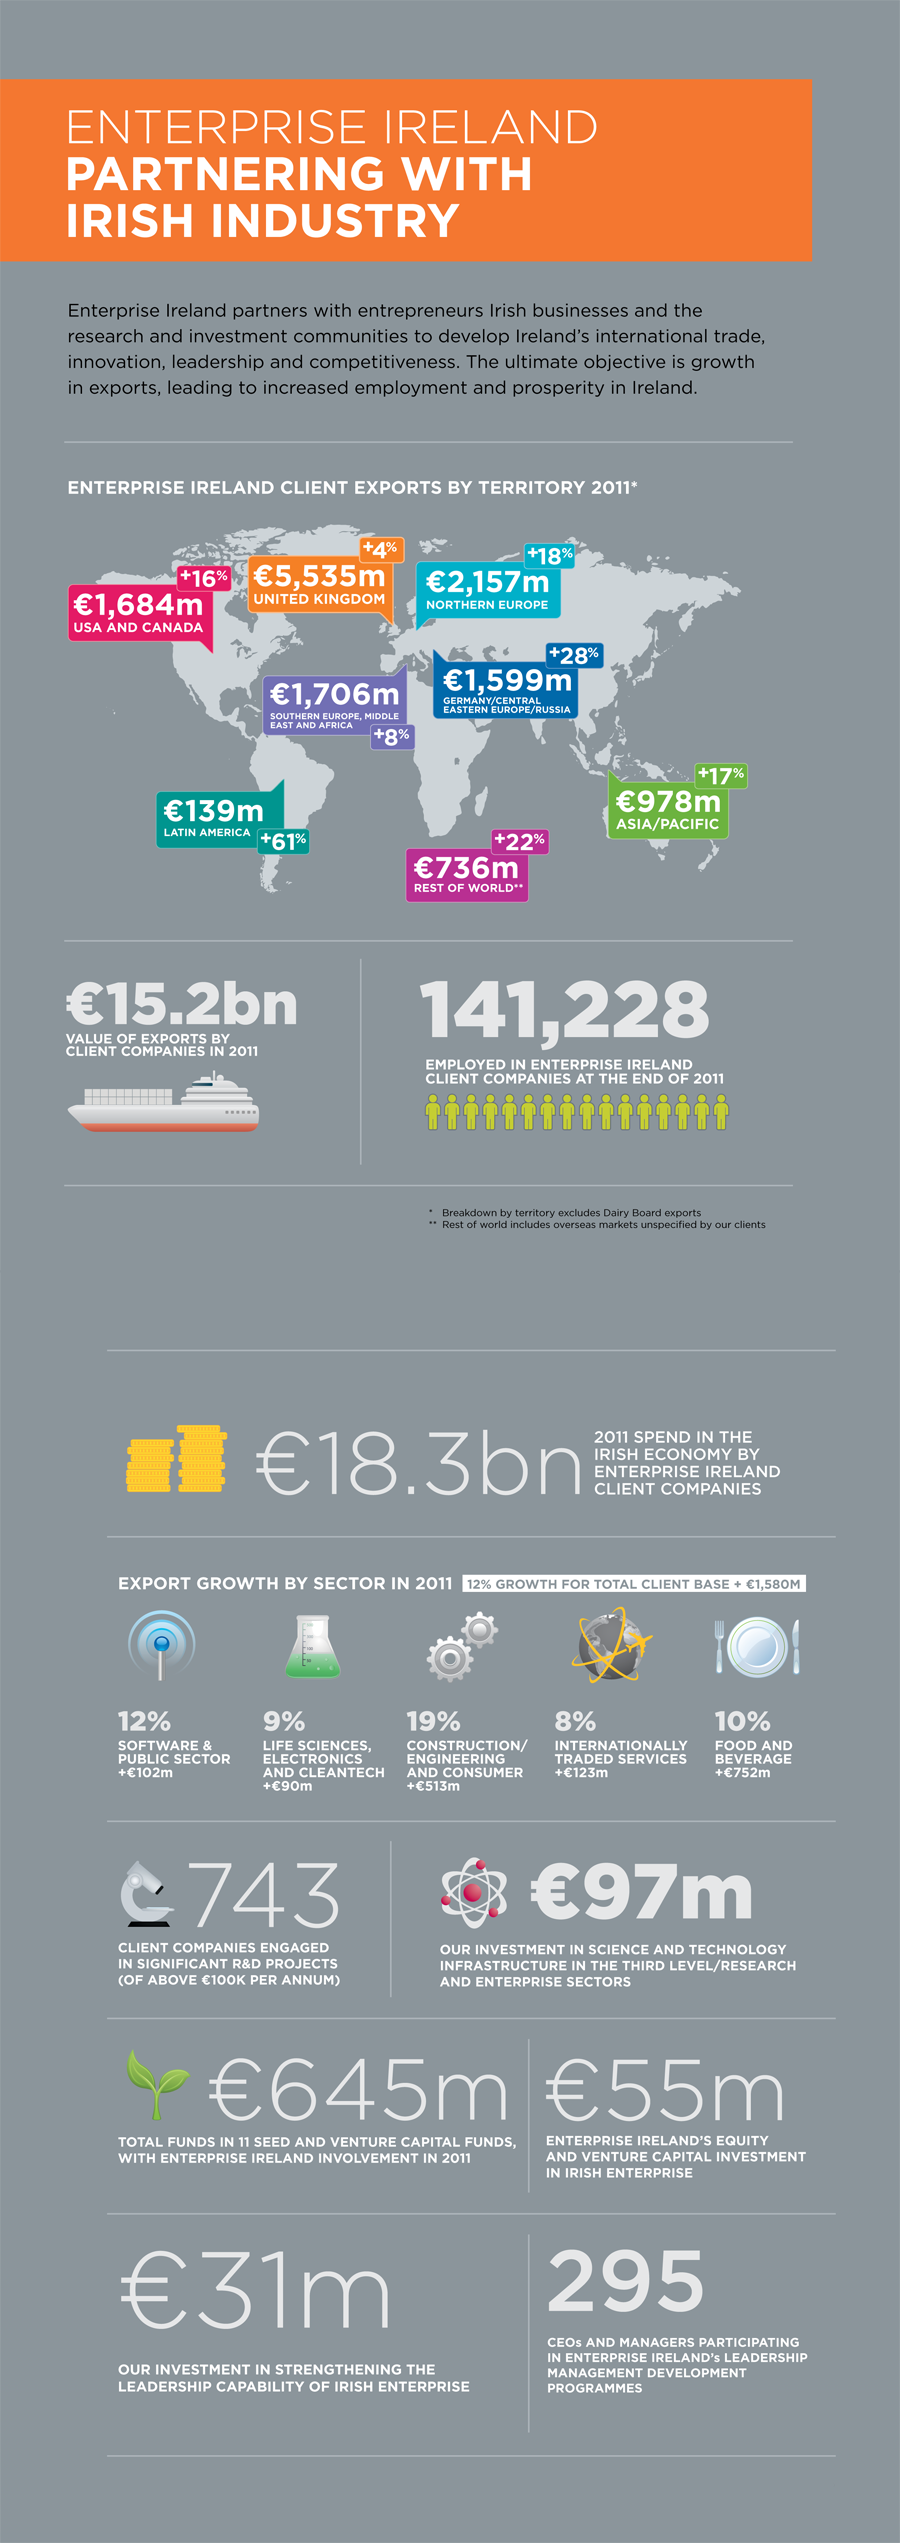  Enterprise Ireland partnering with Irish industry